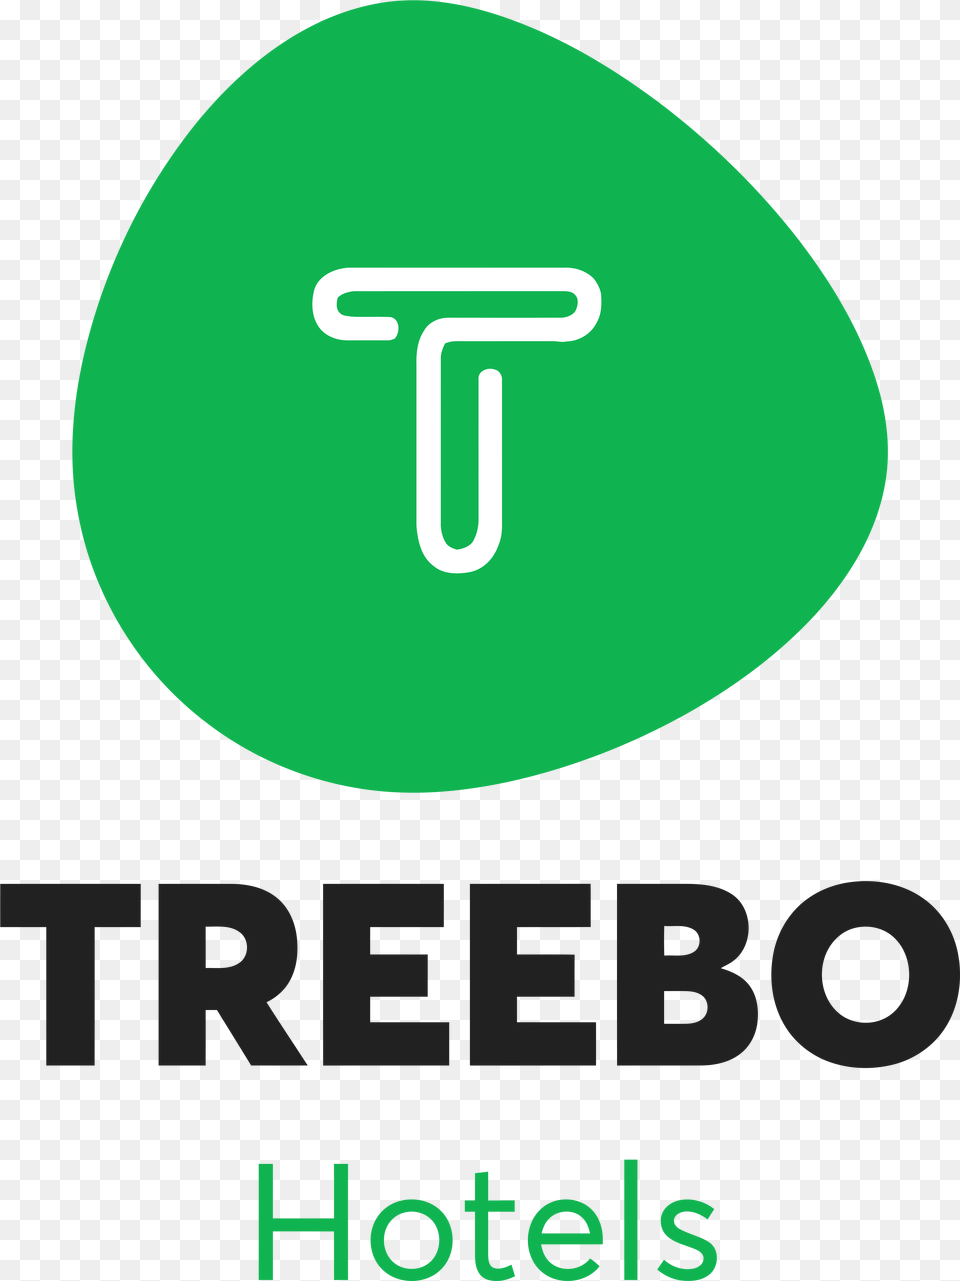 Treebo Hotels Treebo Hotels Logo, Astronomy, Moon, Nature, Night Free Transparent Png